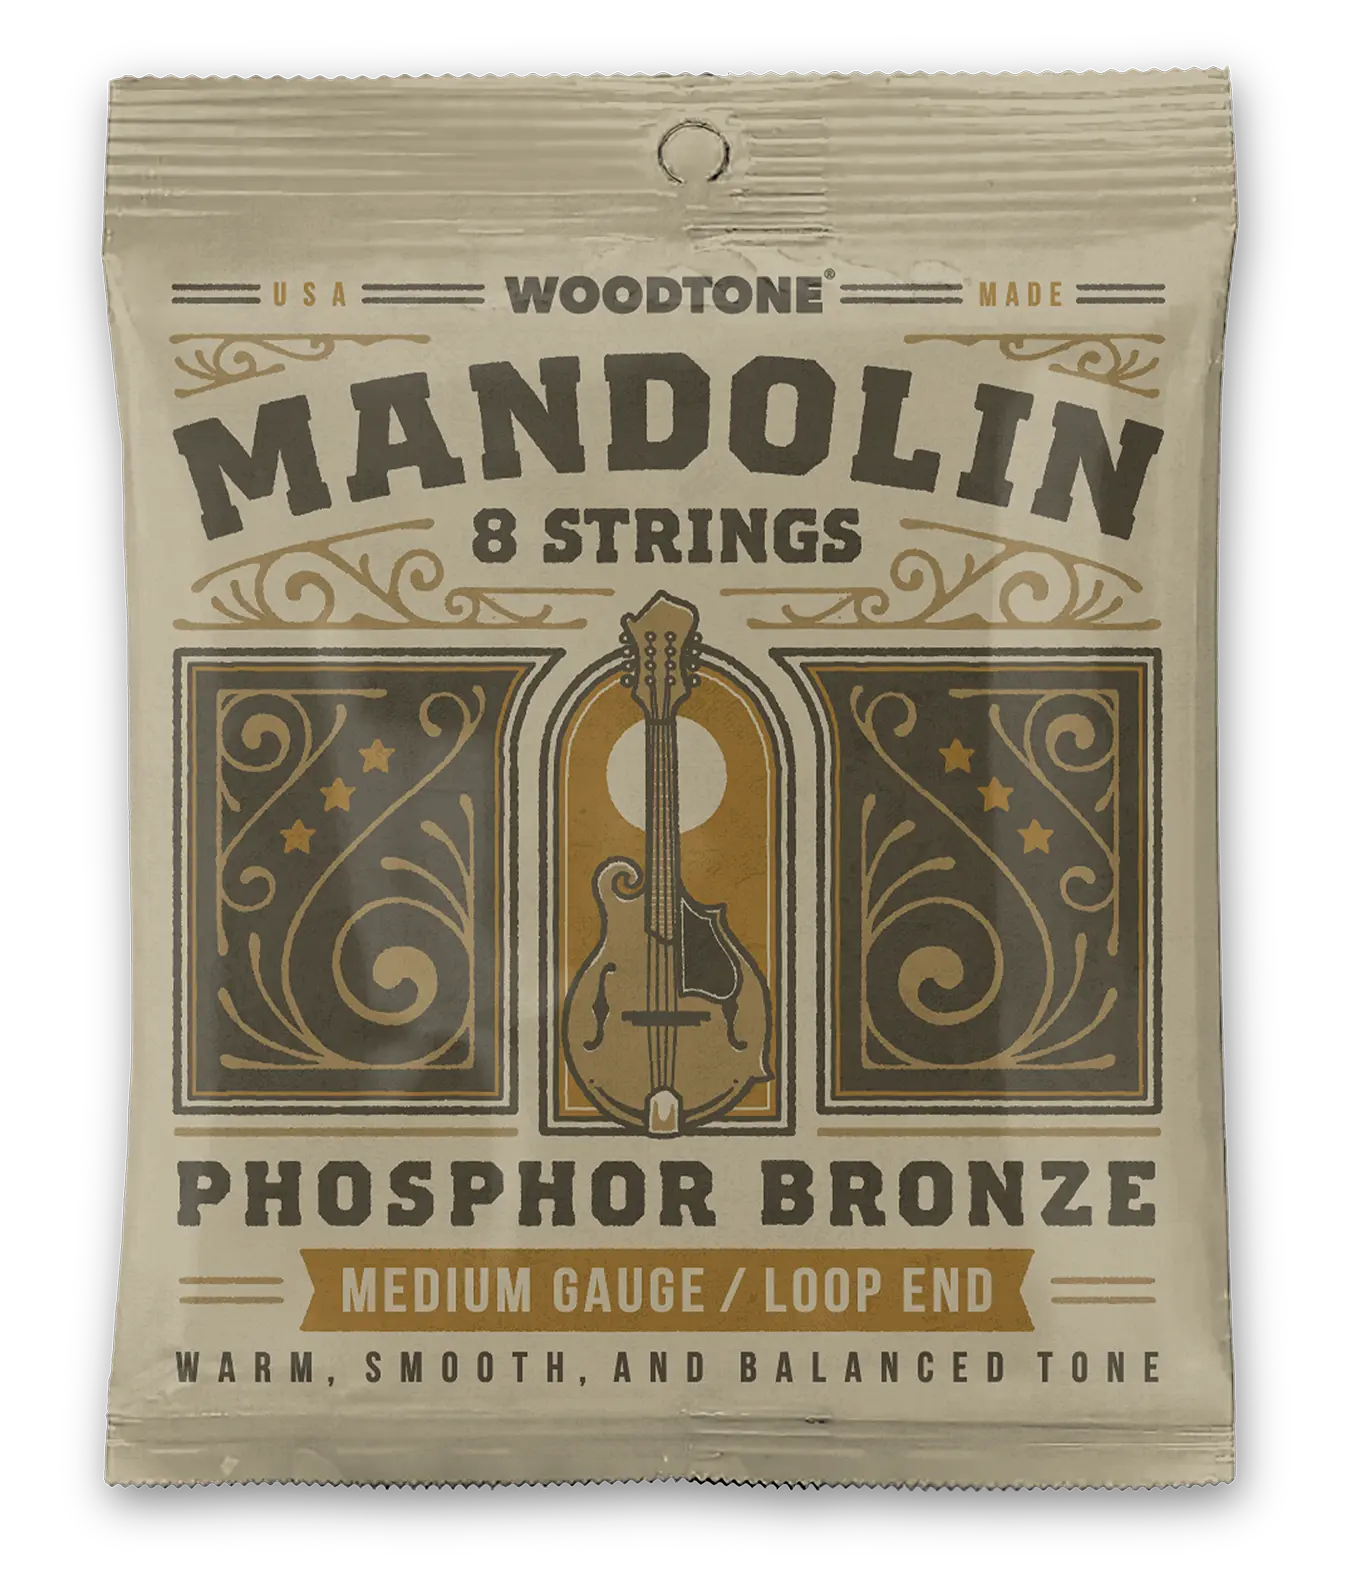 Mandolin / Medium Gauge Phosphor Bronze Non-Coated